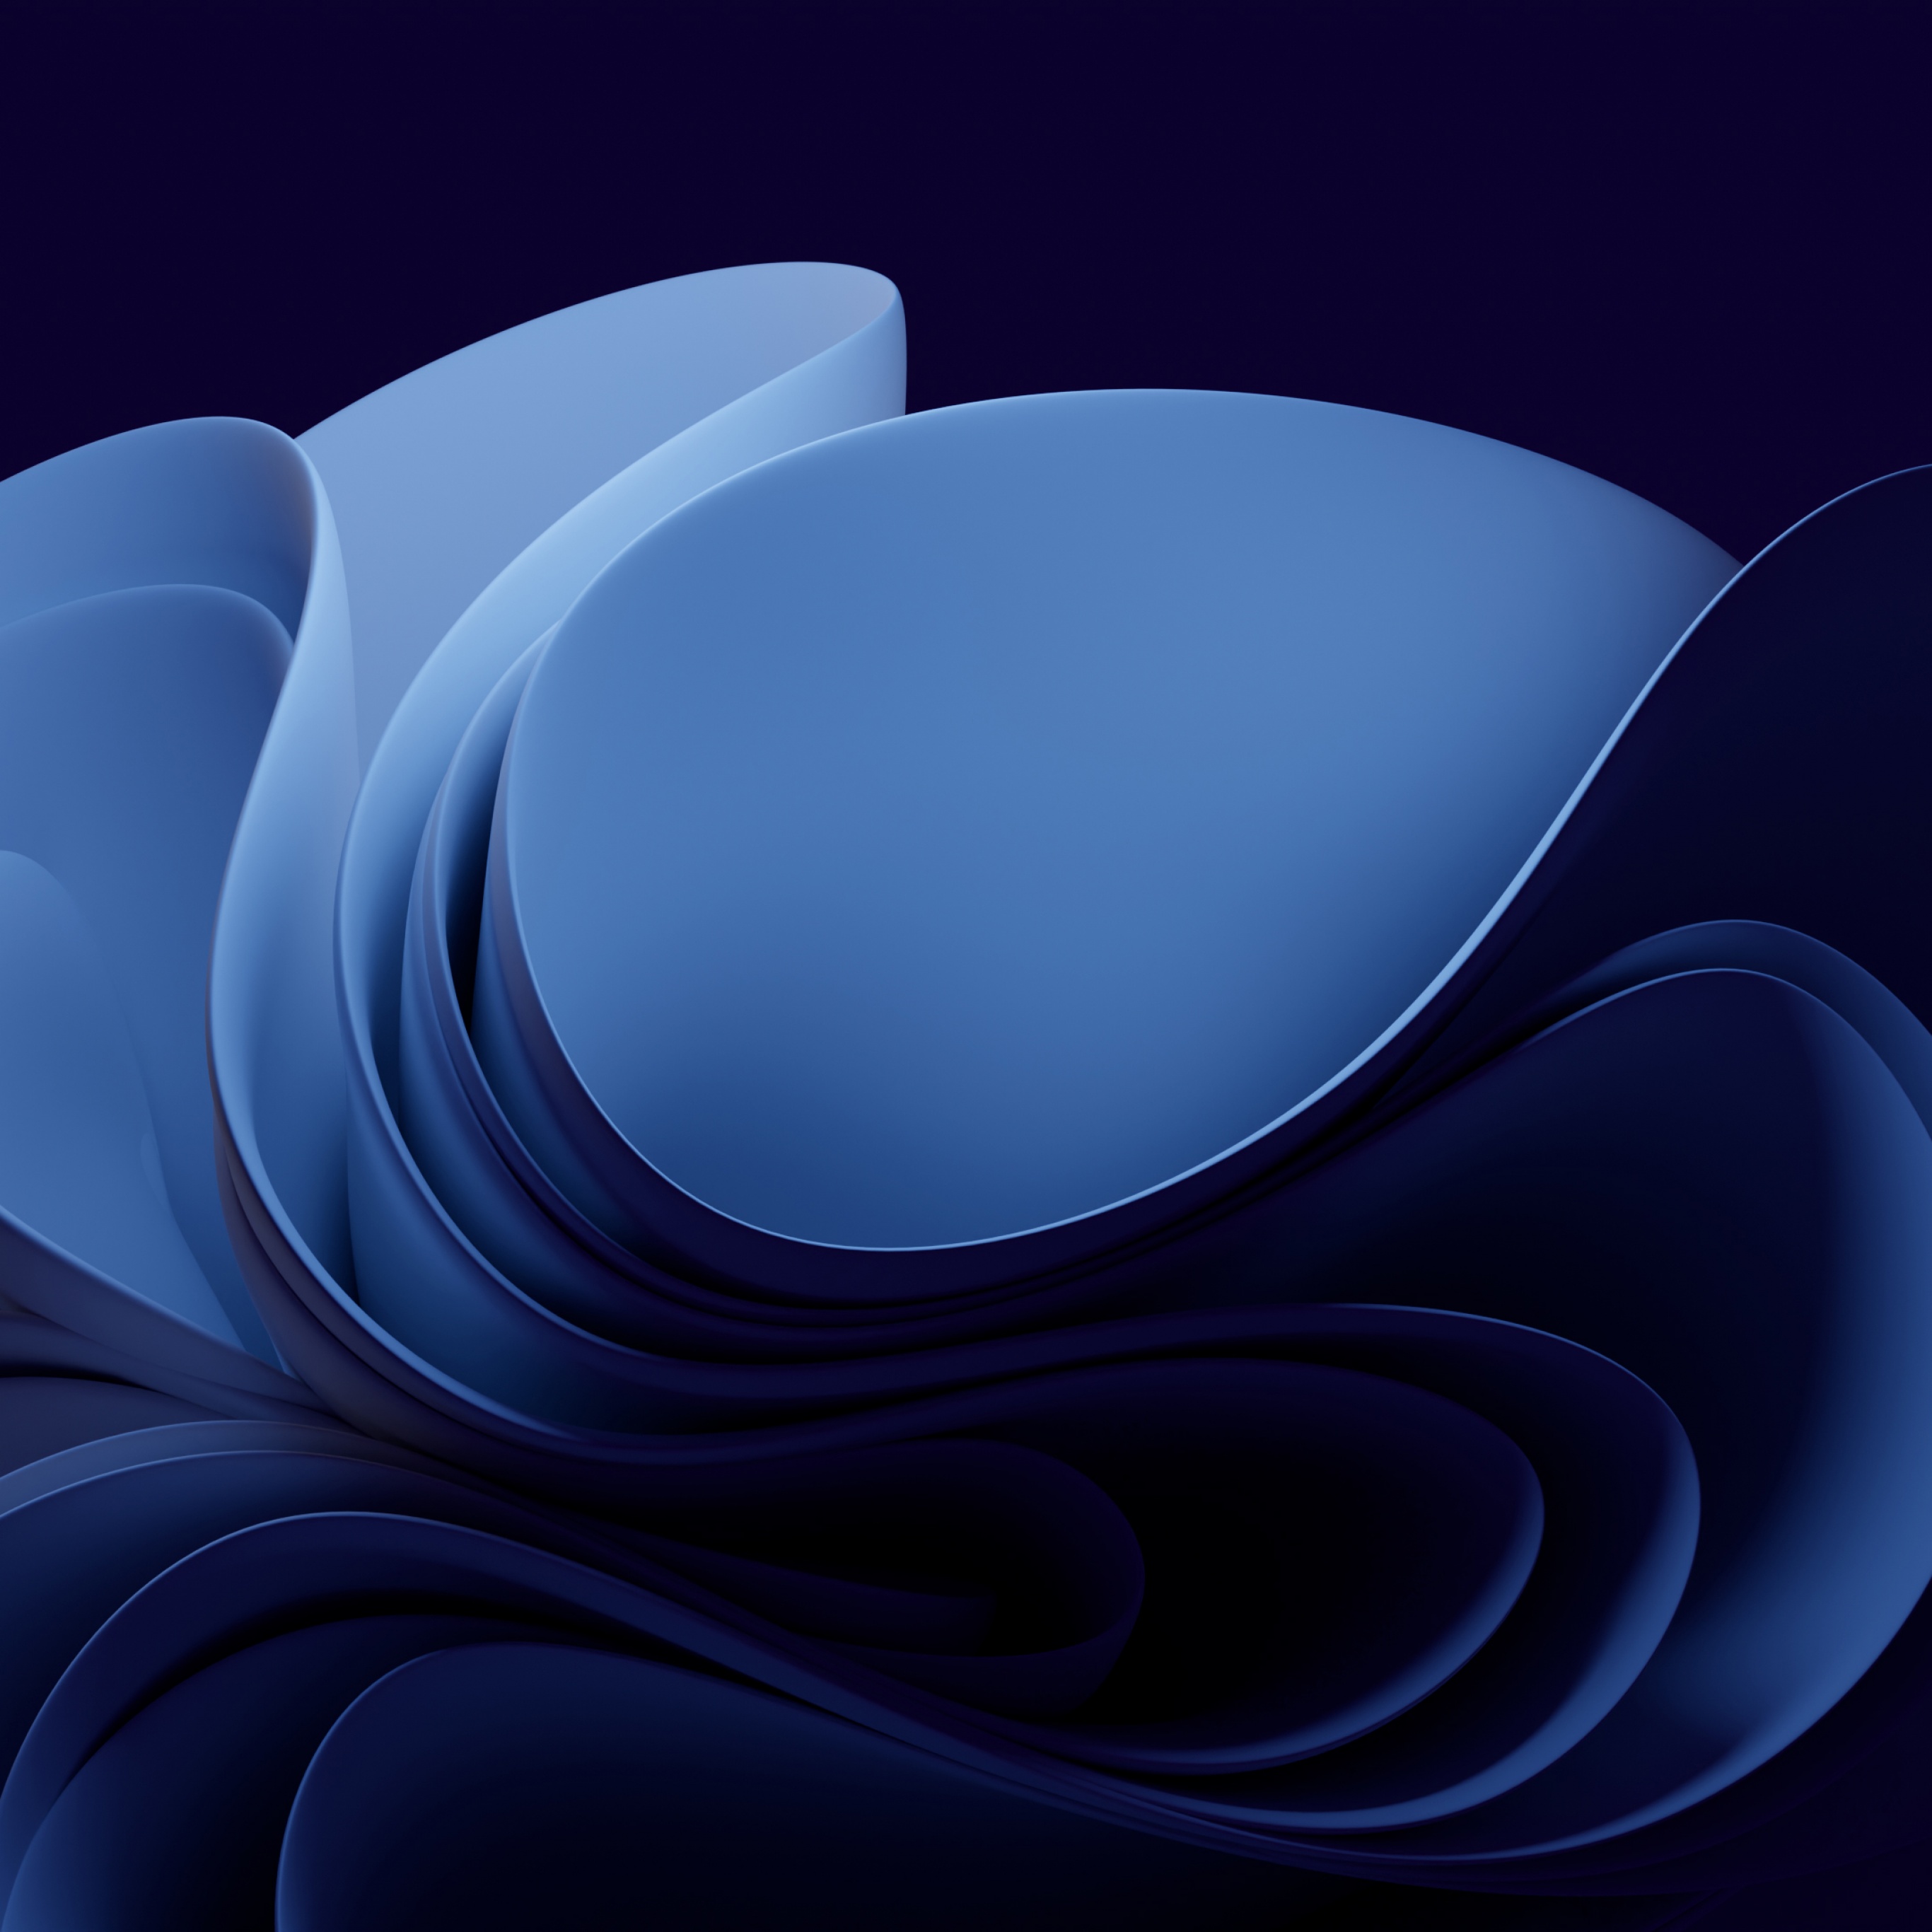 Windows 11 dark blue abstract background 4K wallpaper download